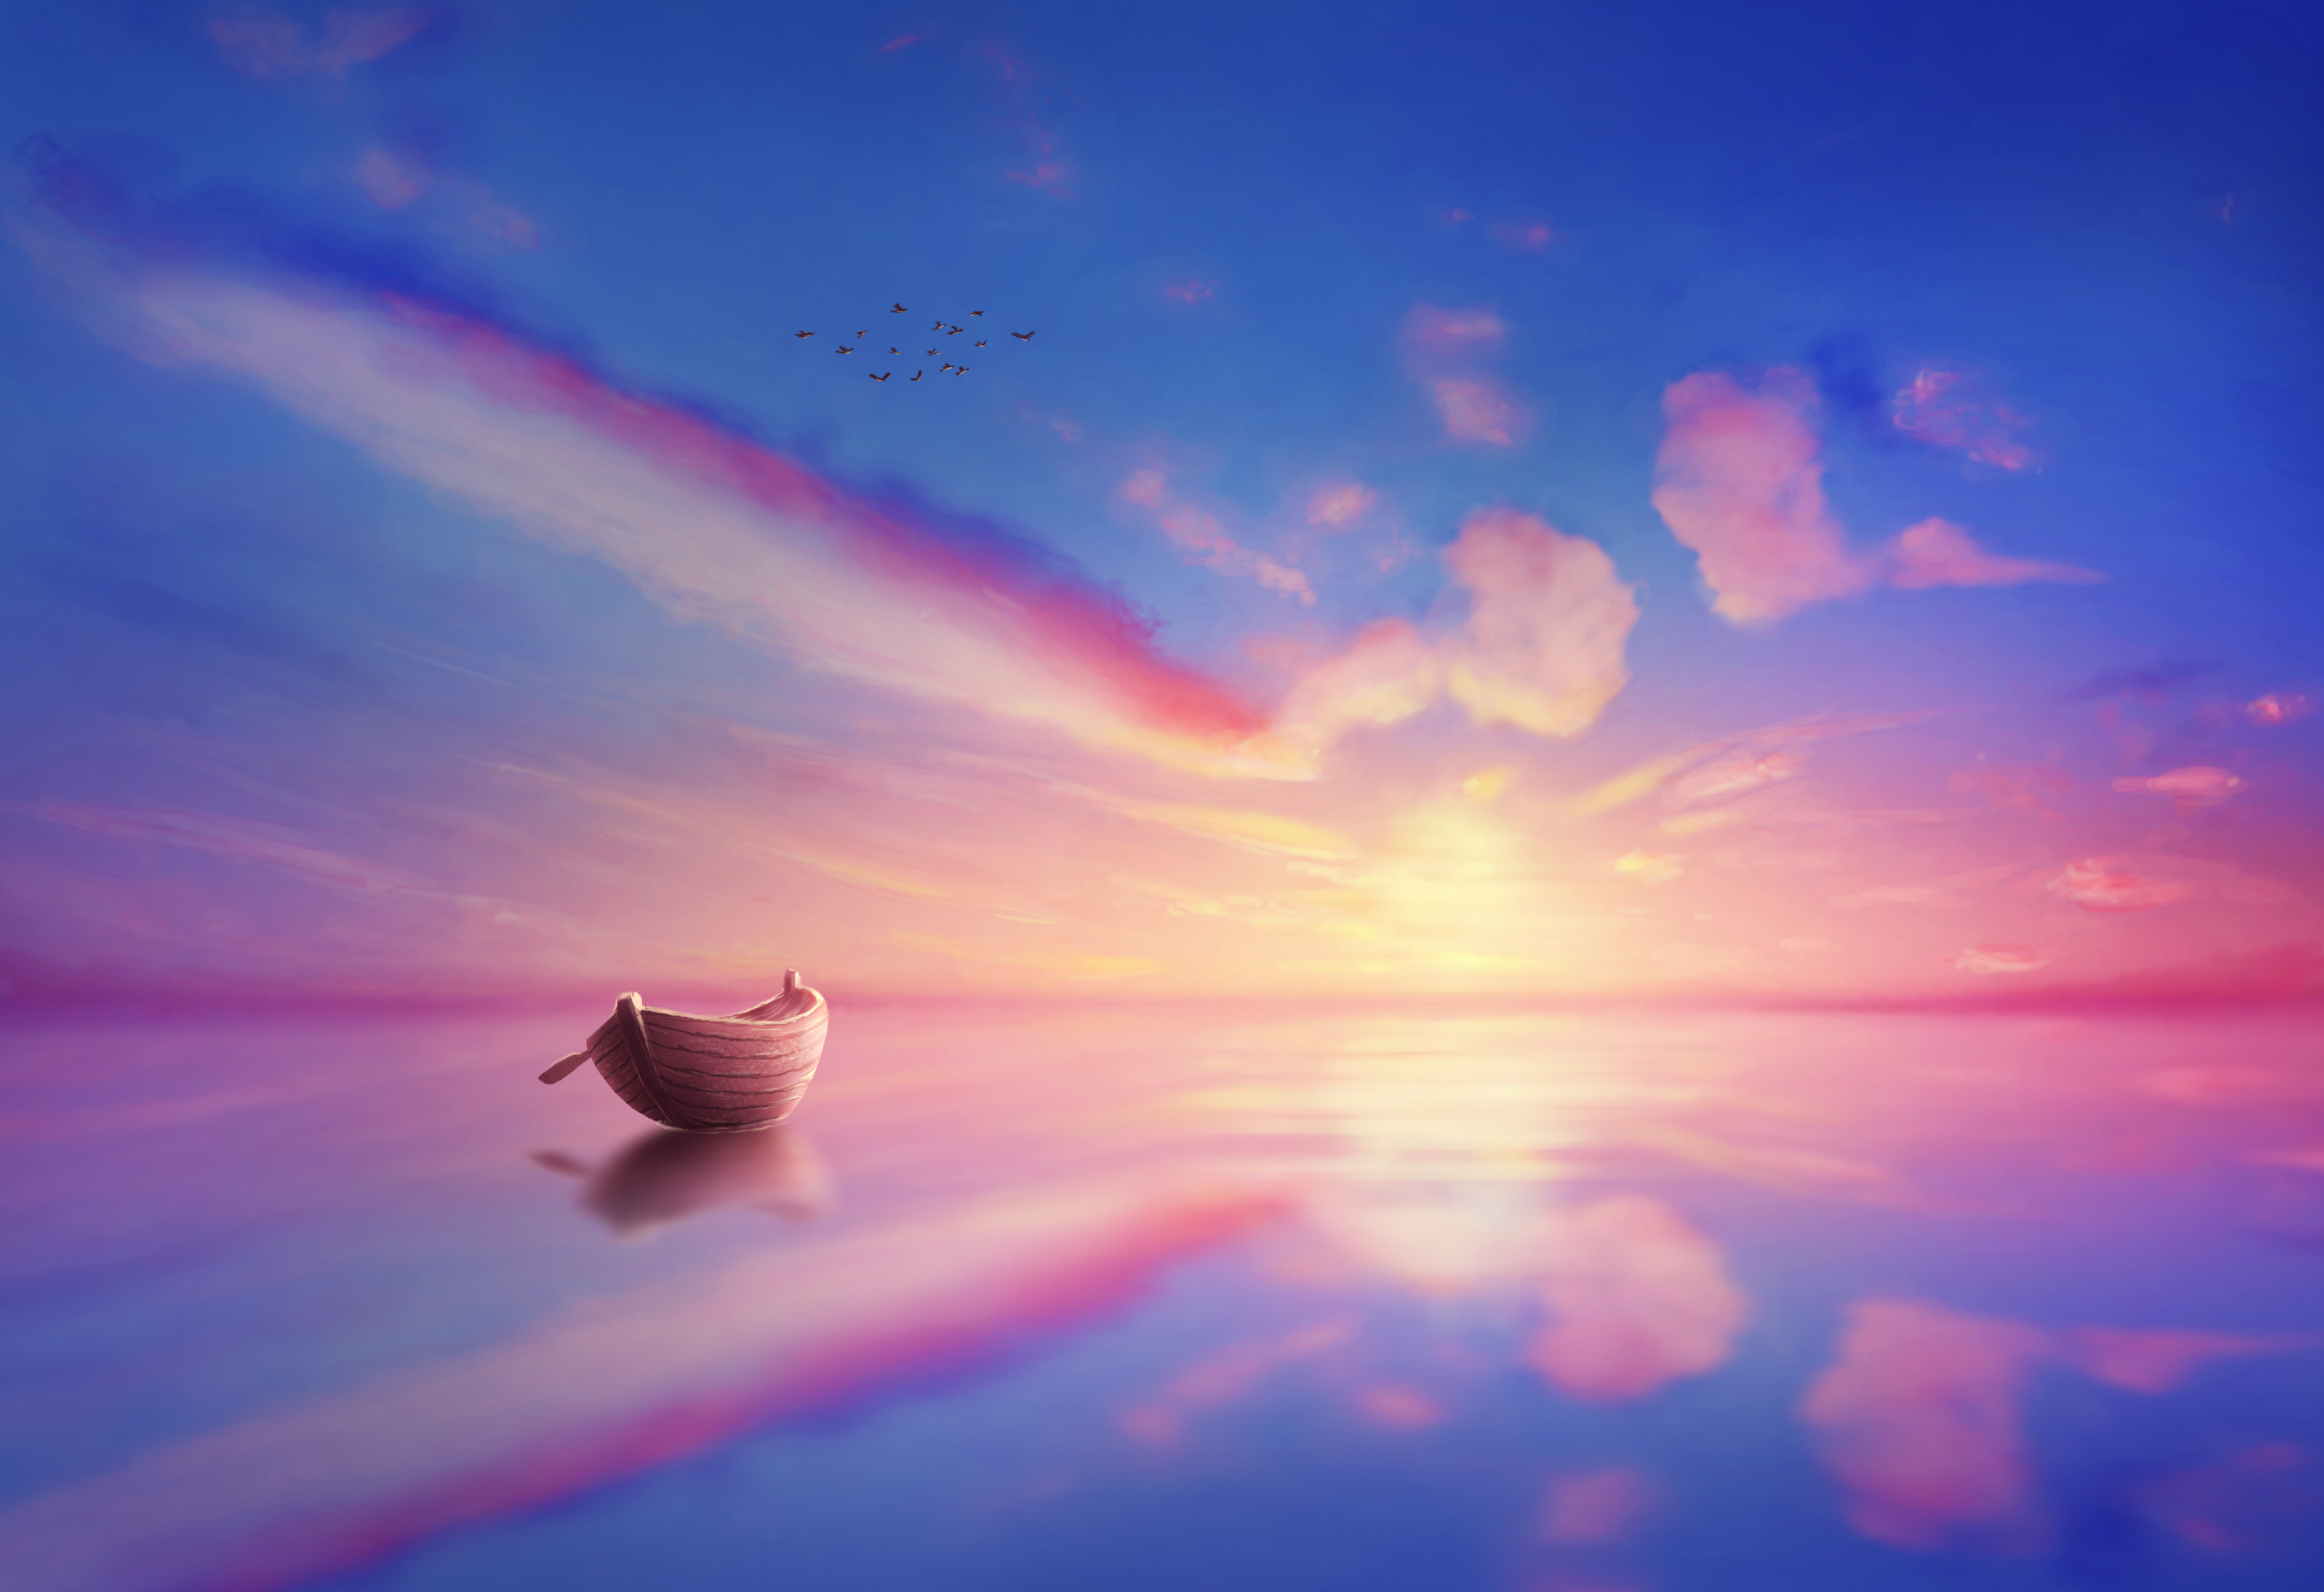 General 3000x2055 digital art artwork illustration photoshopped landscape nature sky skyscape water sea birds Sun sunlight sunset boat reflection clouds blue pink